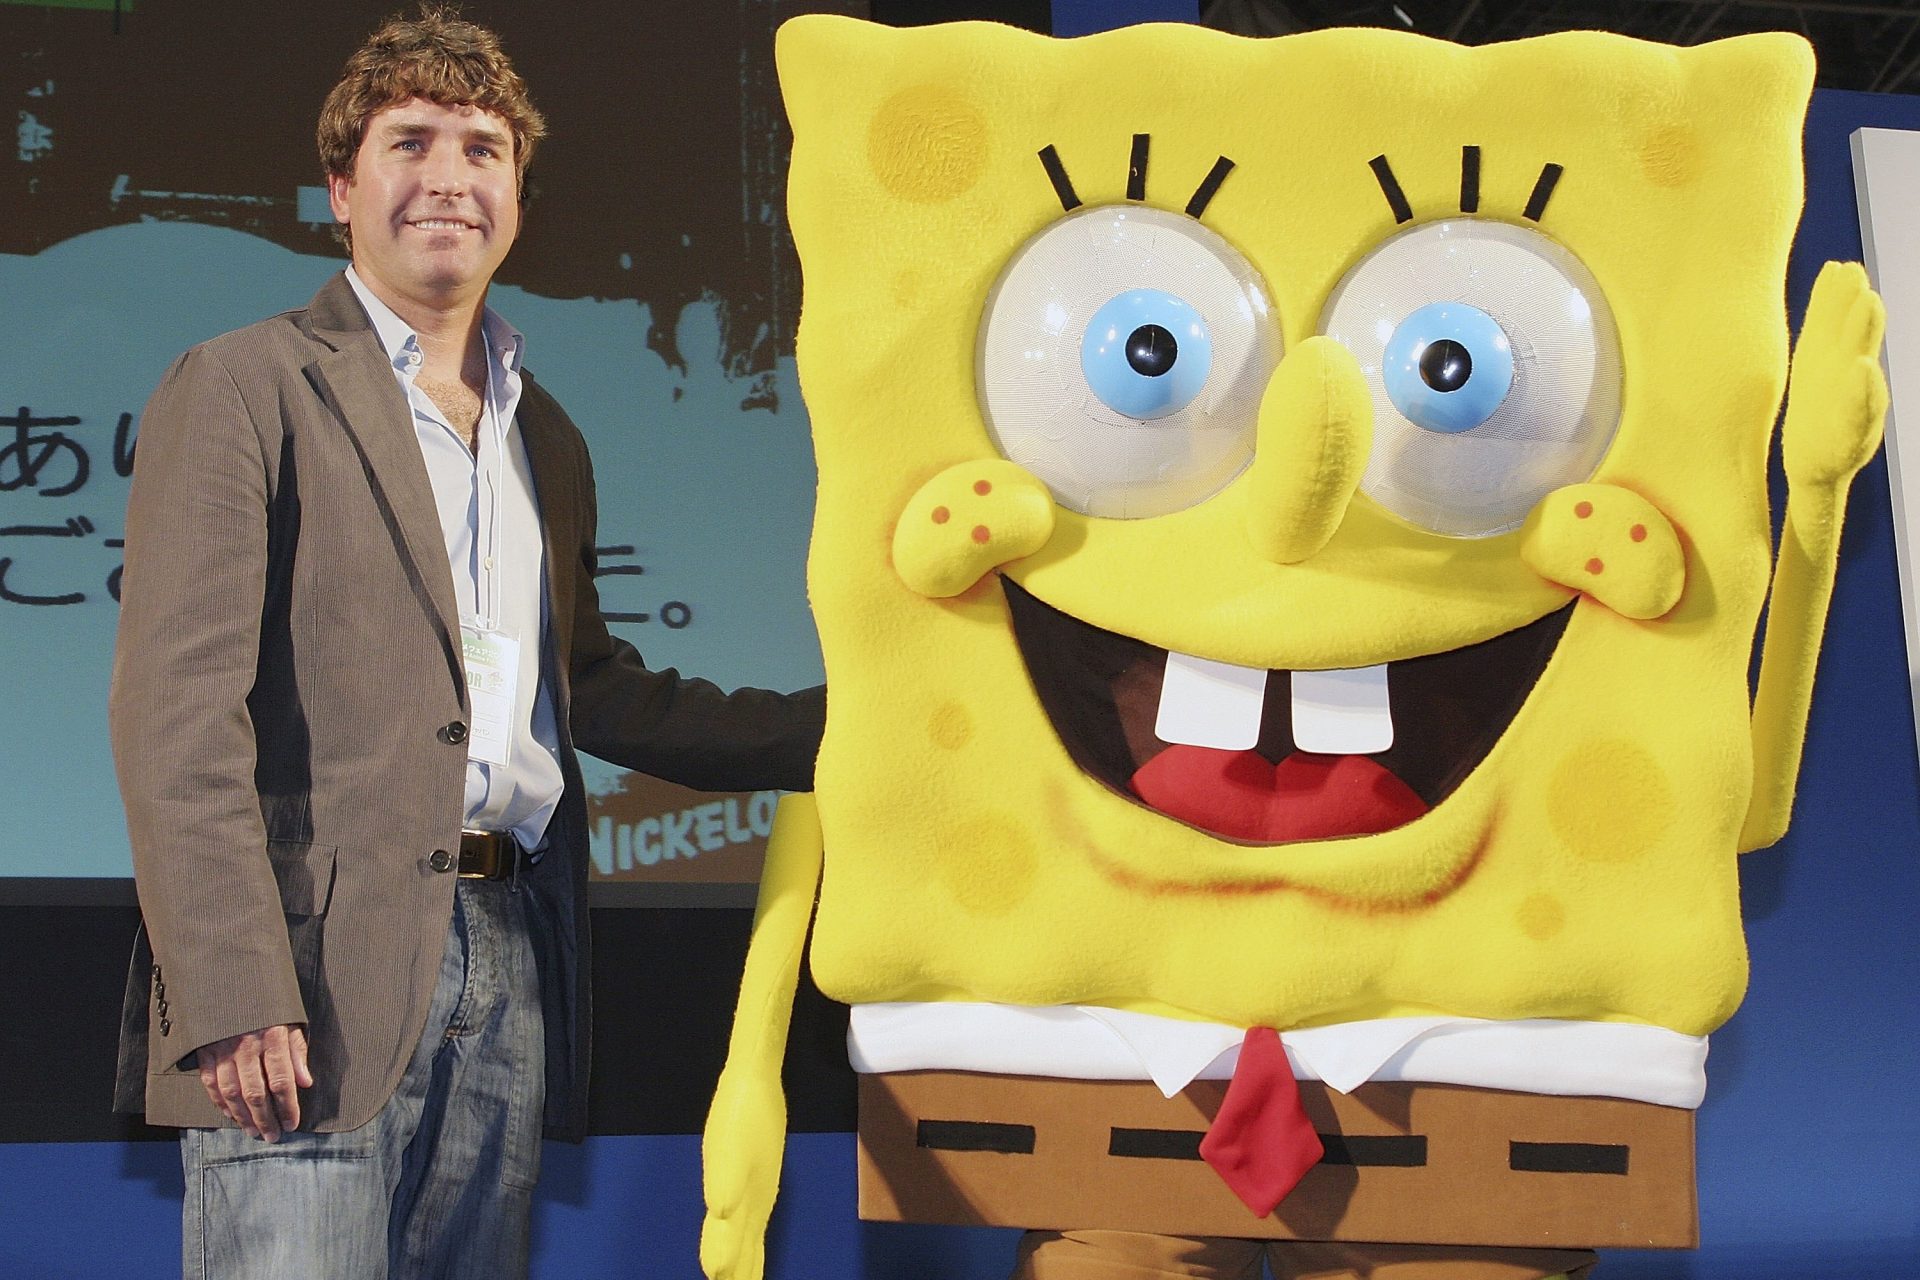 The tragic story and death of the creator of SpongeBob SquarePants